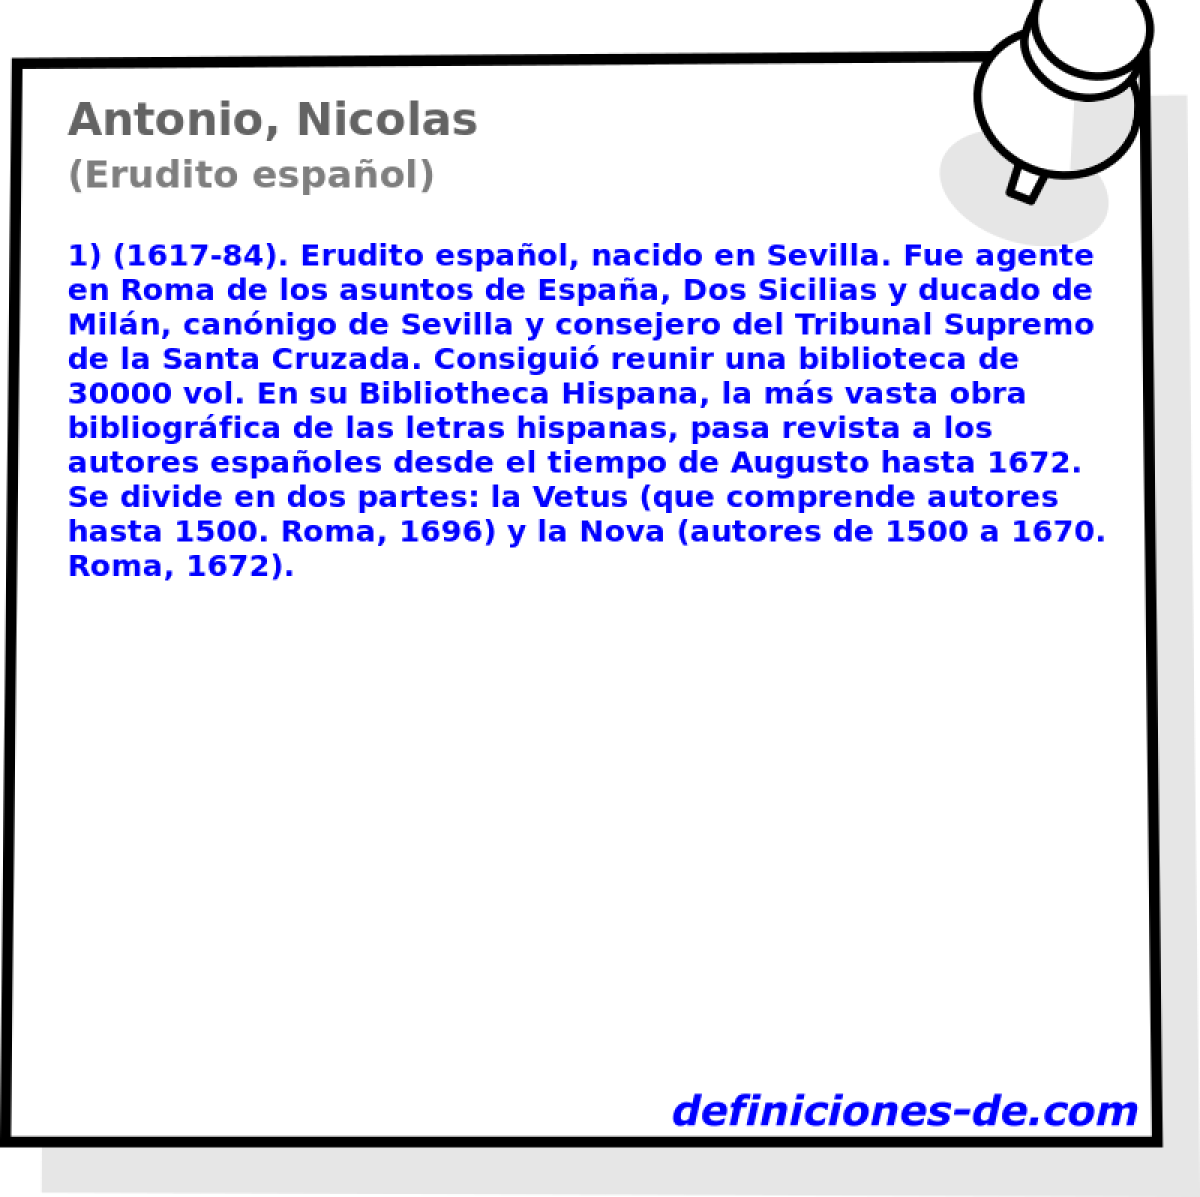 Antonio, Nicolas (Erudito espaol)